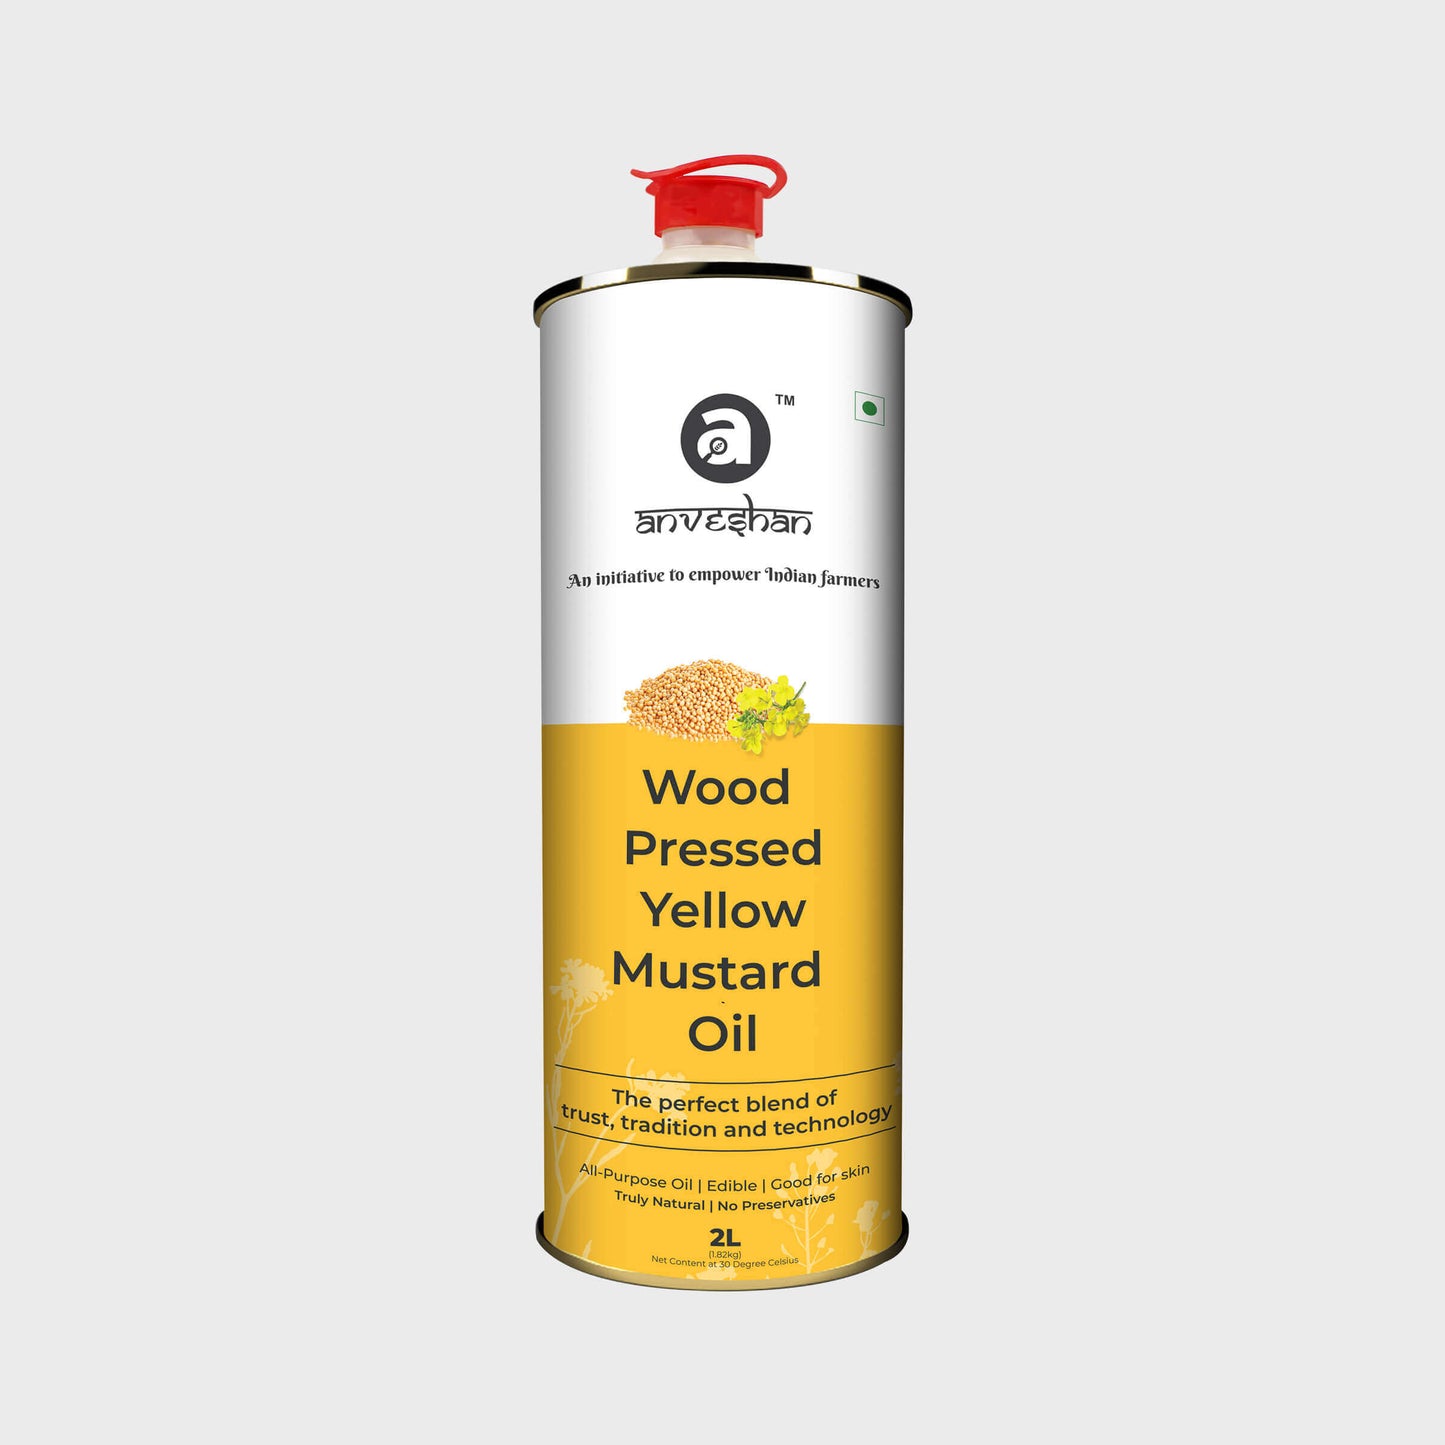 Wood-Pressed Yellow Mustard Oil